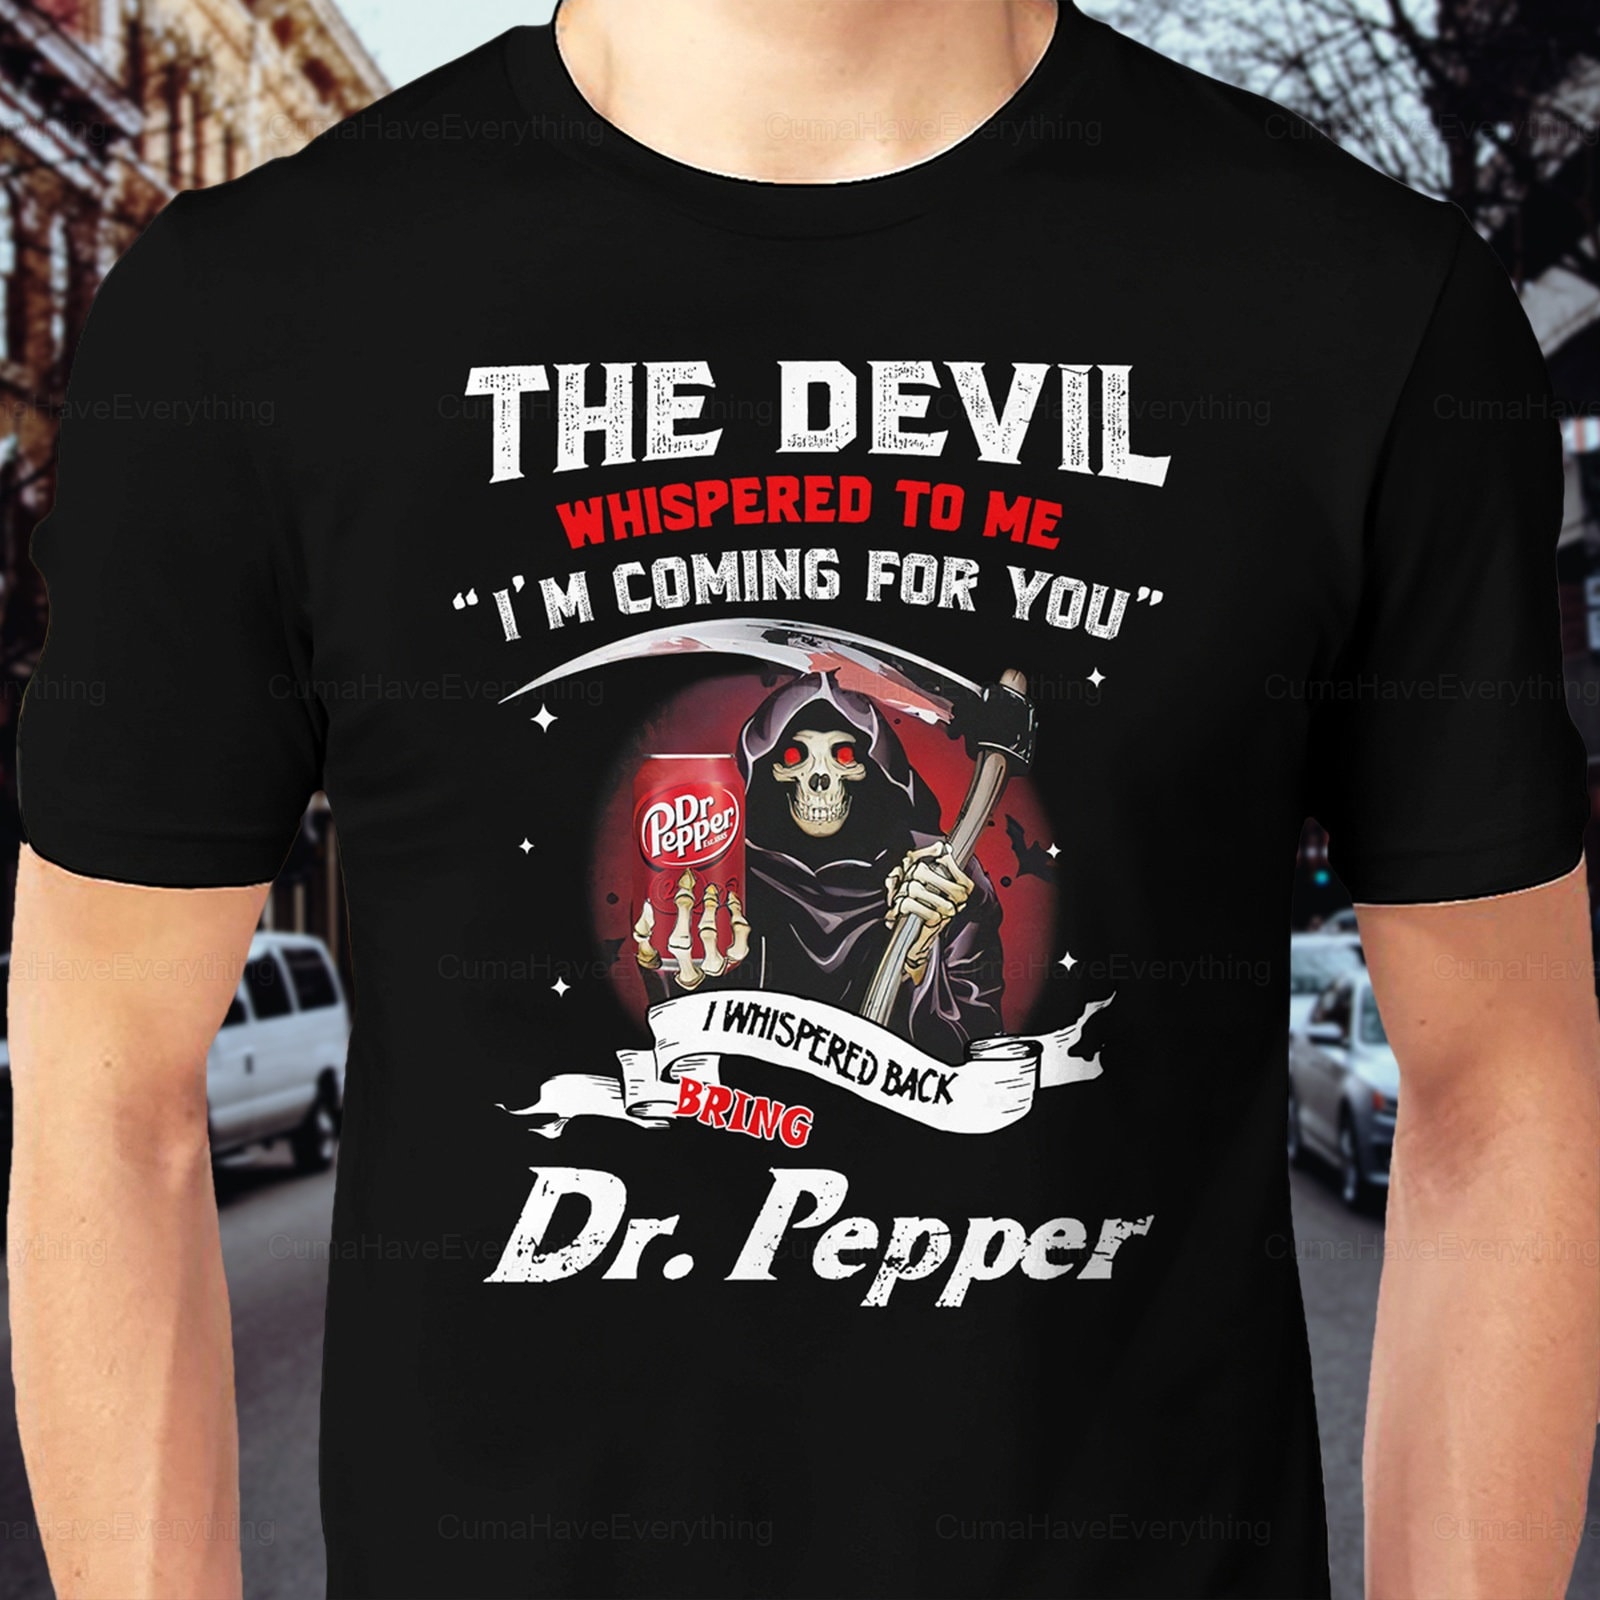 Discover Dr Pepper Shirt, The Devil Whispered To Me I'm Coming Shirt, Dr Pepper Unisex Tshirt, Shirts For Men, Skull Shirt Women, Trendy Sweatshirt